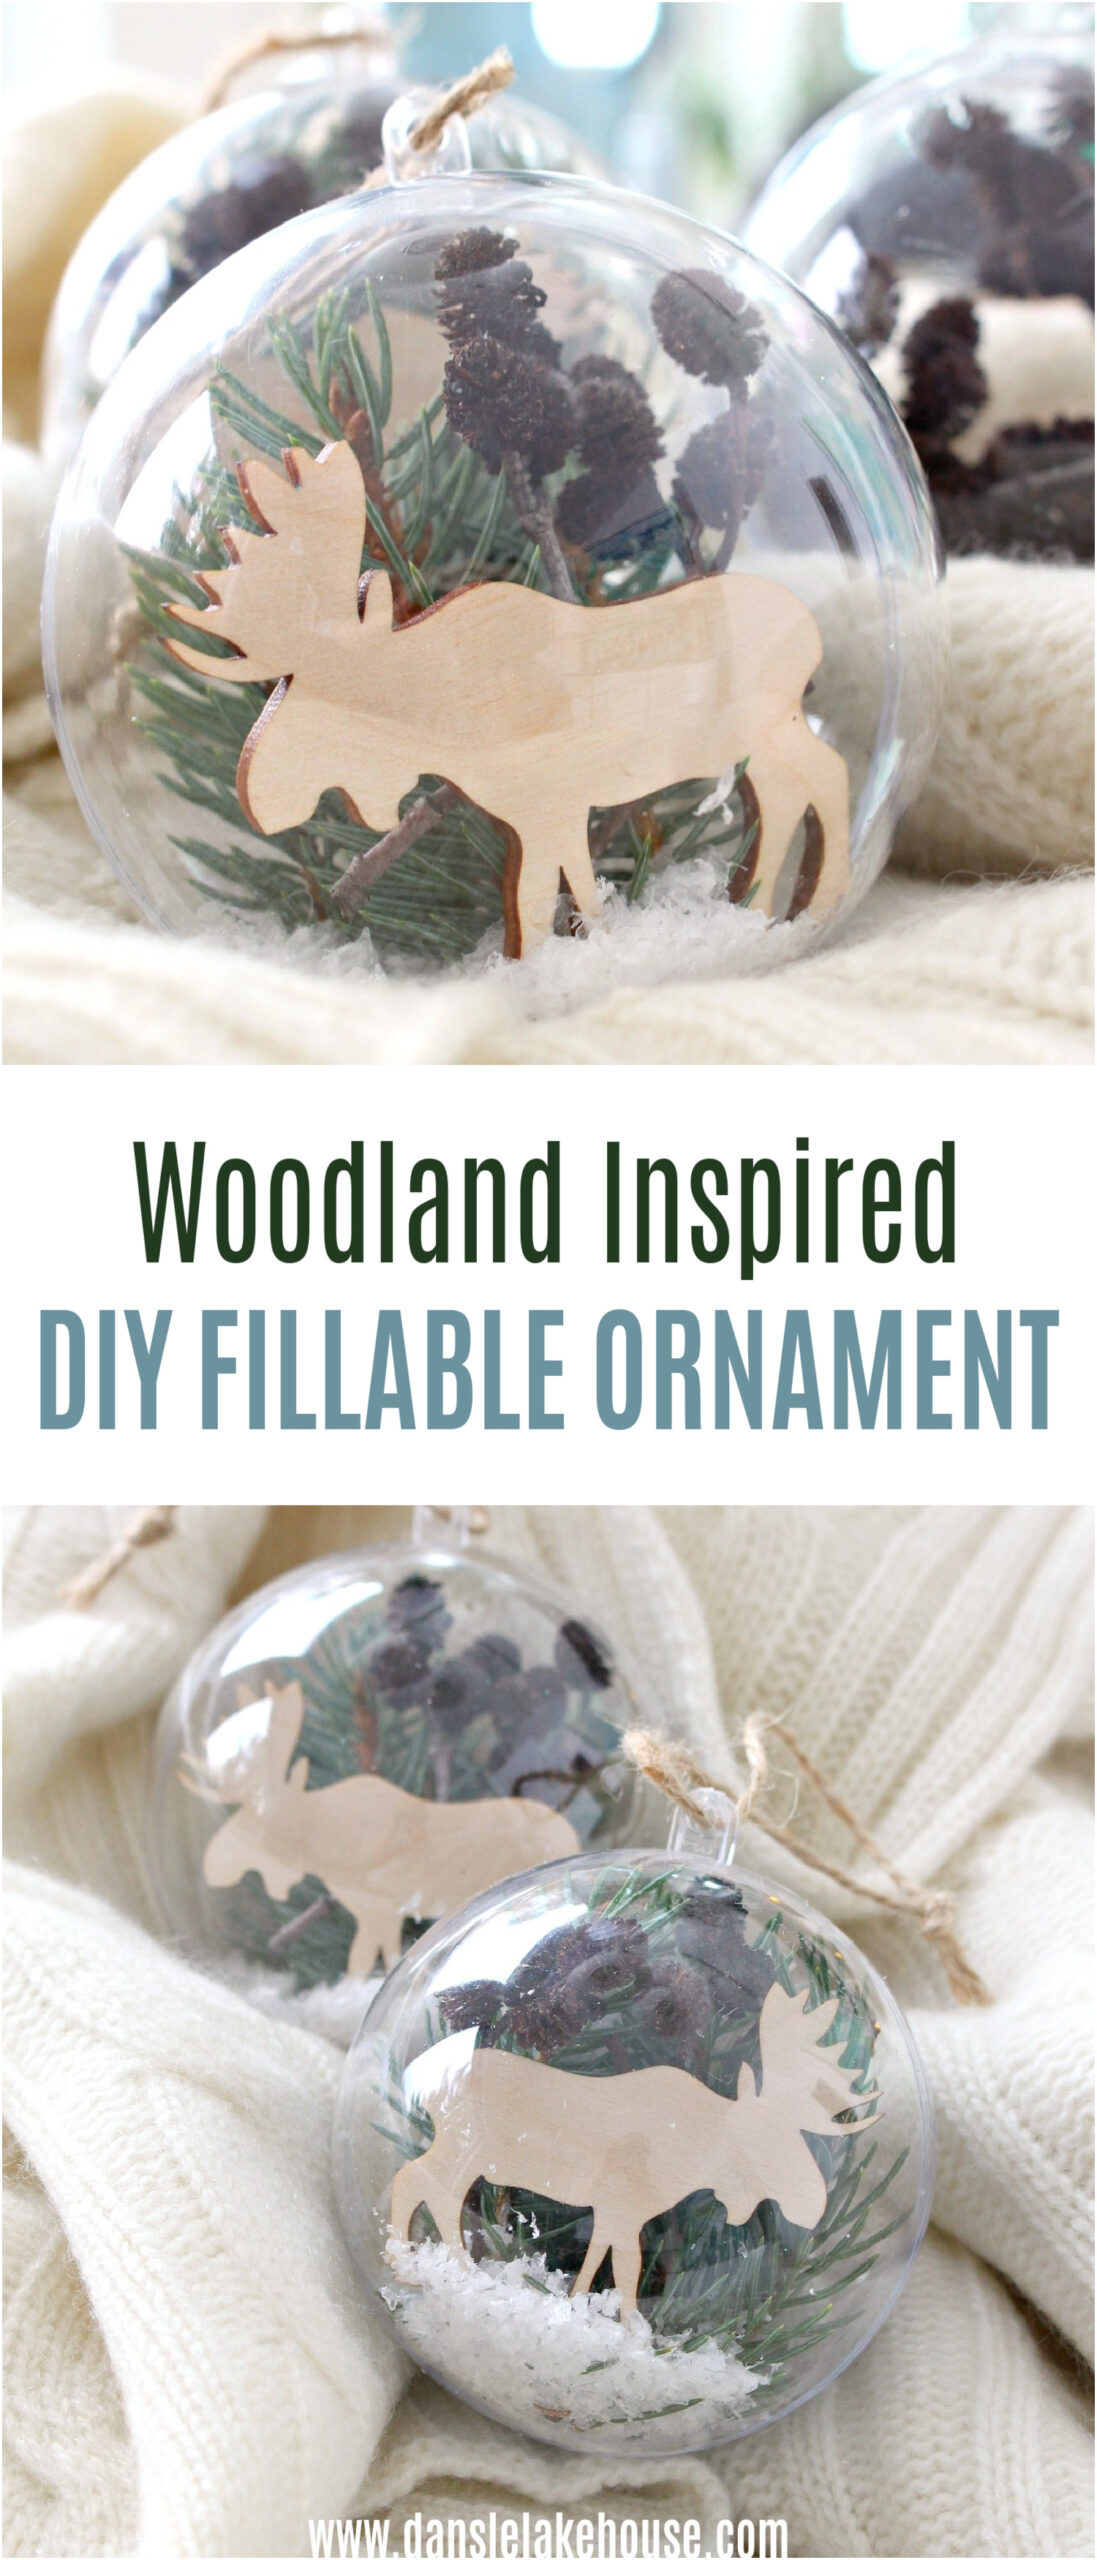 Easy Fillable Ornament Ideas